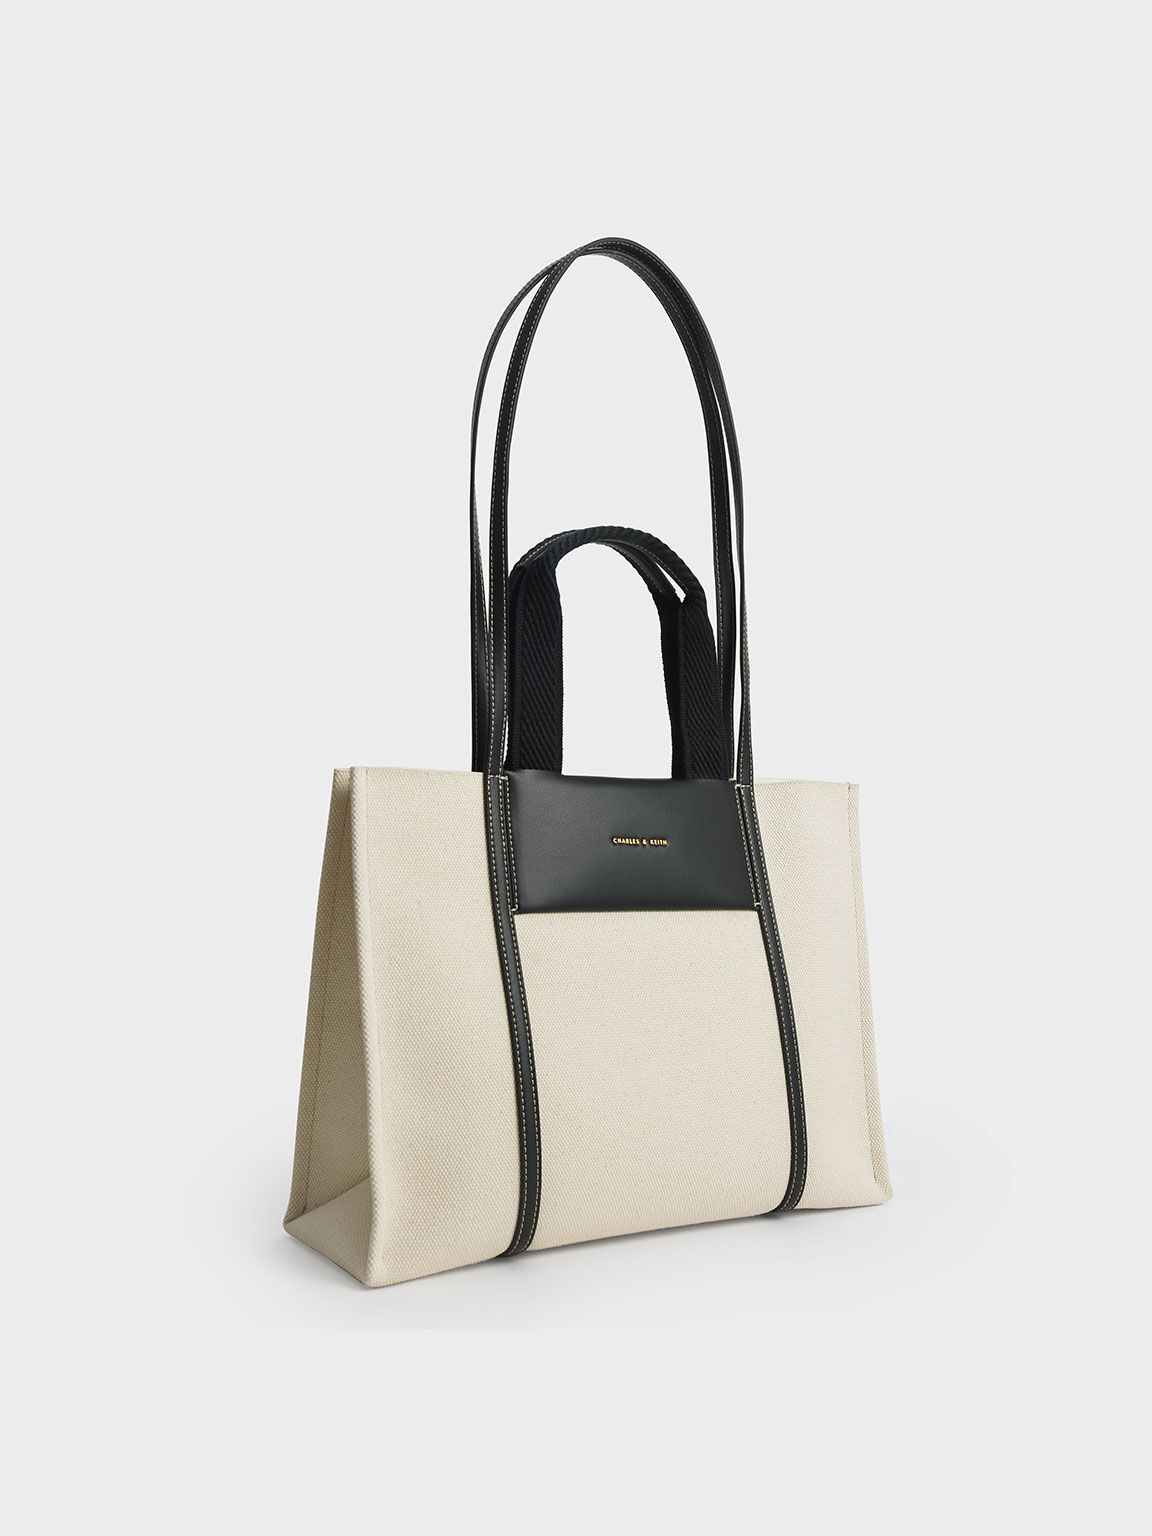 Pin on Designer Handbags / Purses - Tote Bags - Wallets - Wristlets